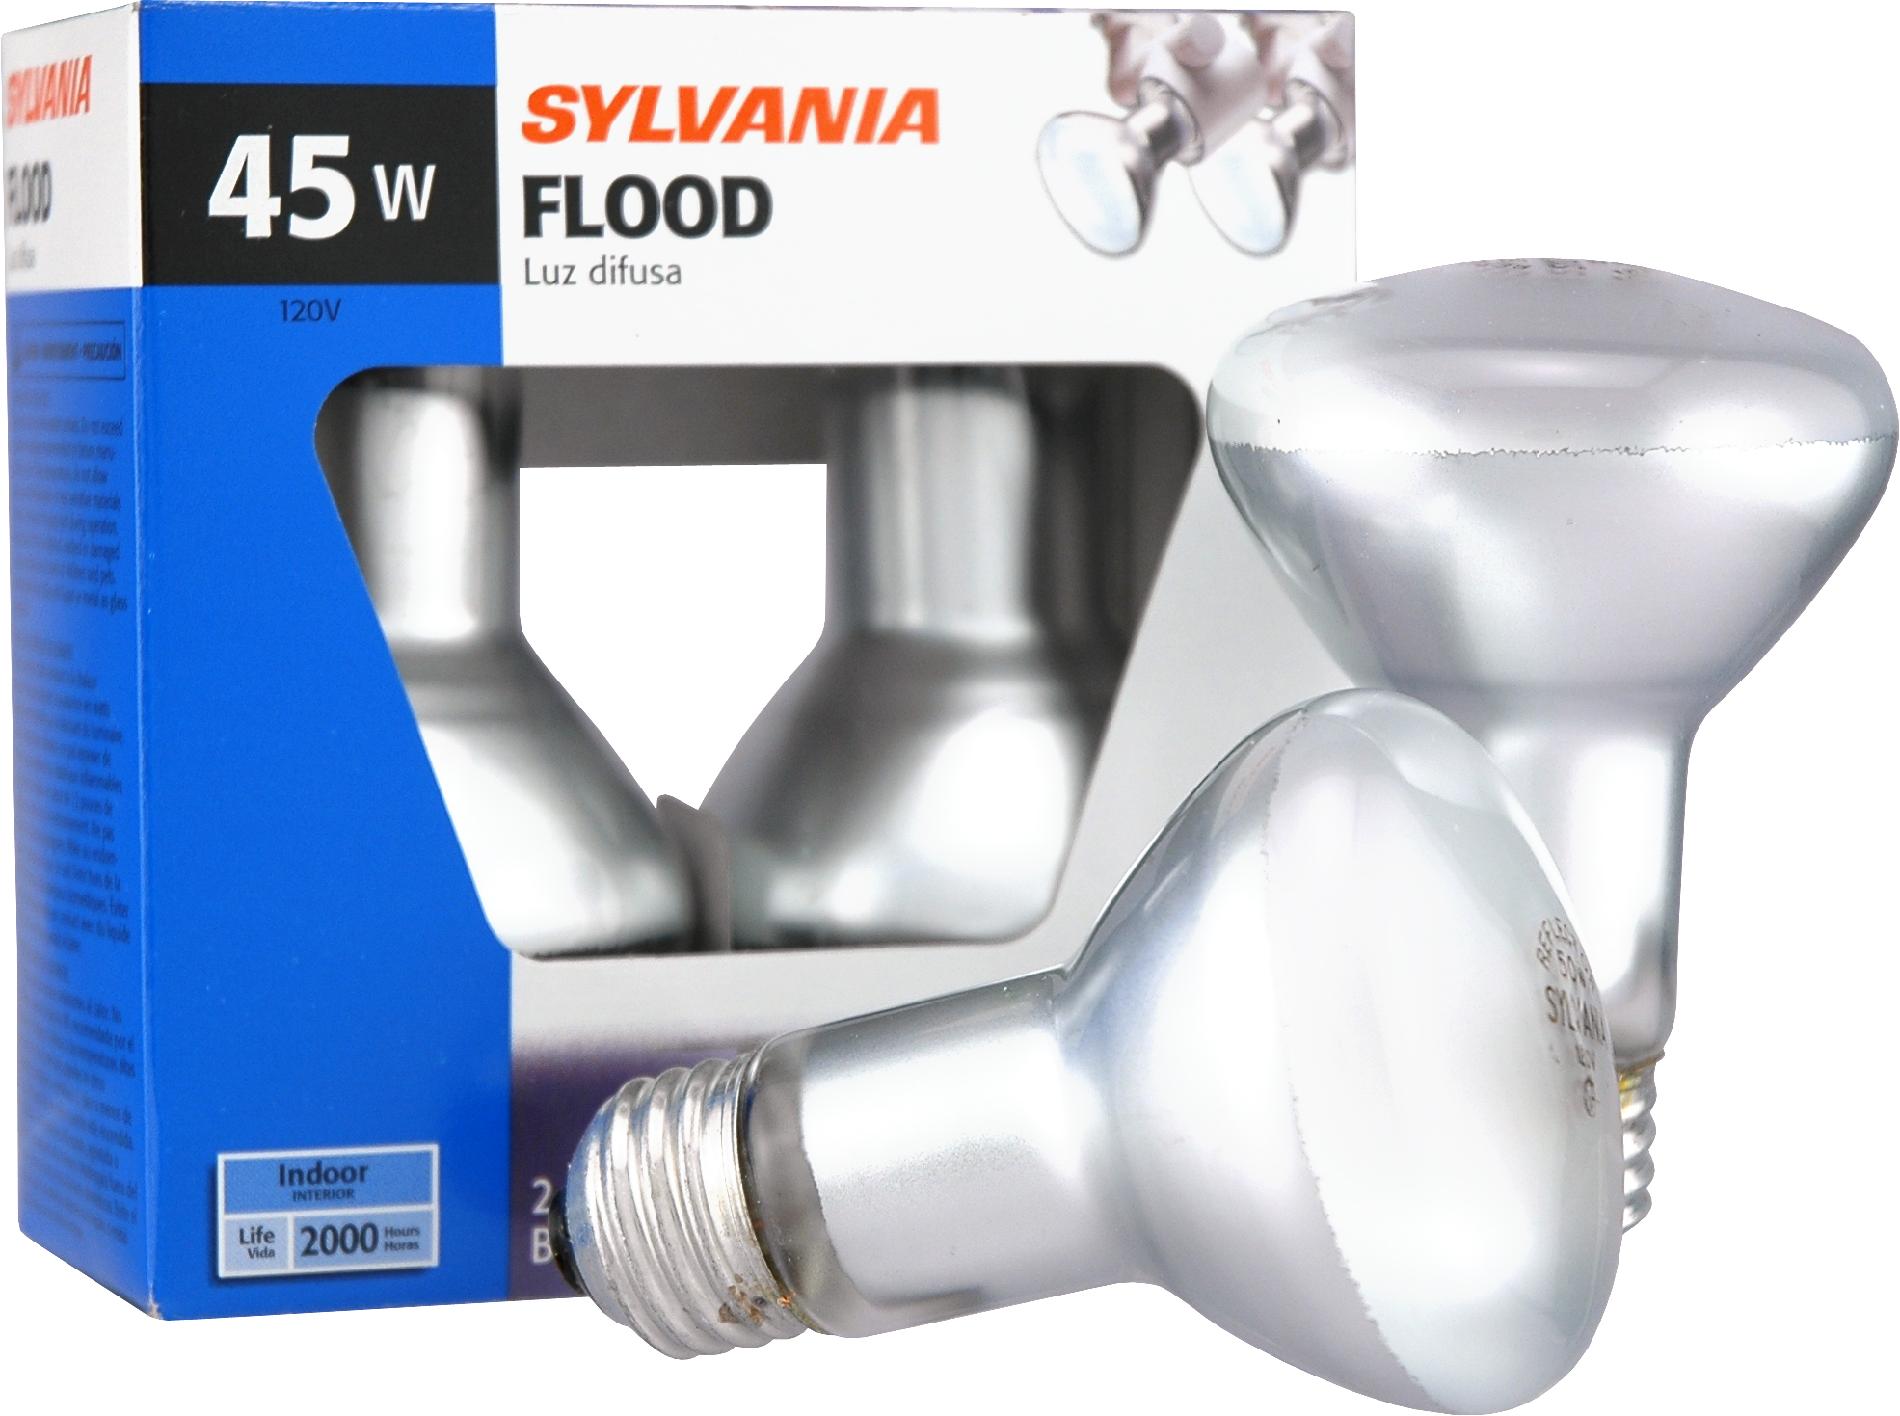 Sylvania Incandescent Reflector Flood Lamp R20-Medium Base 120V Light Bulb 45W - 2 Pack